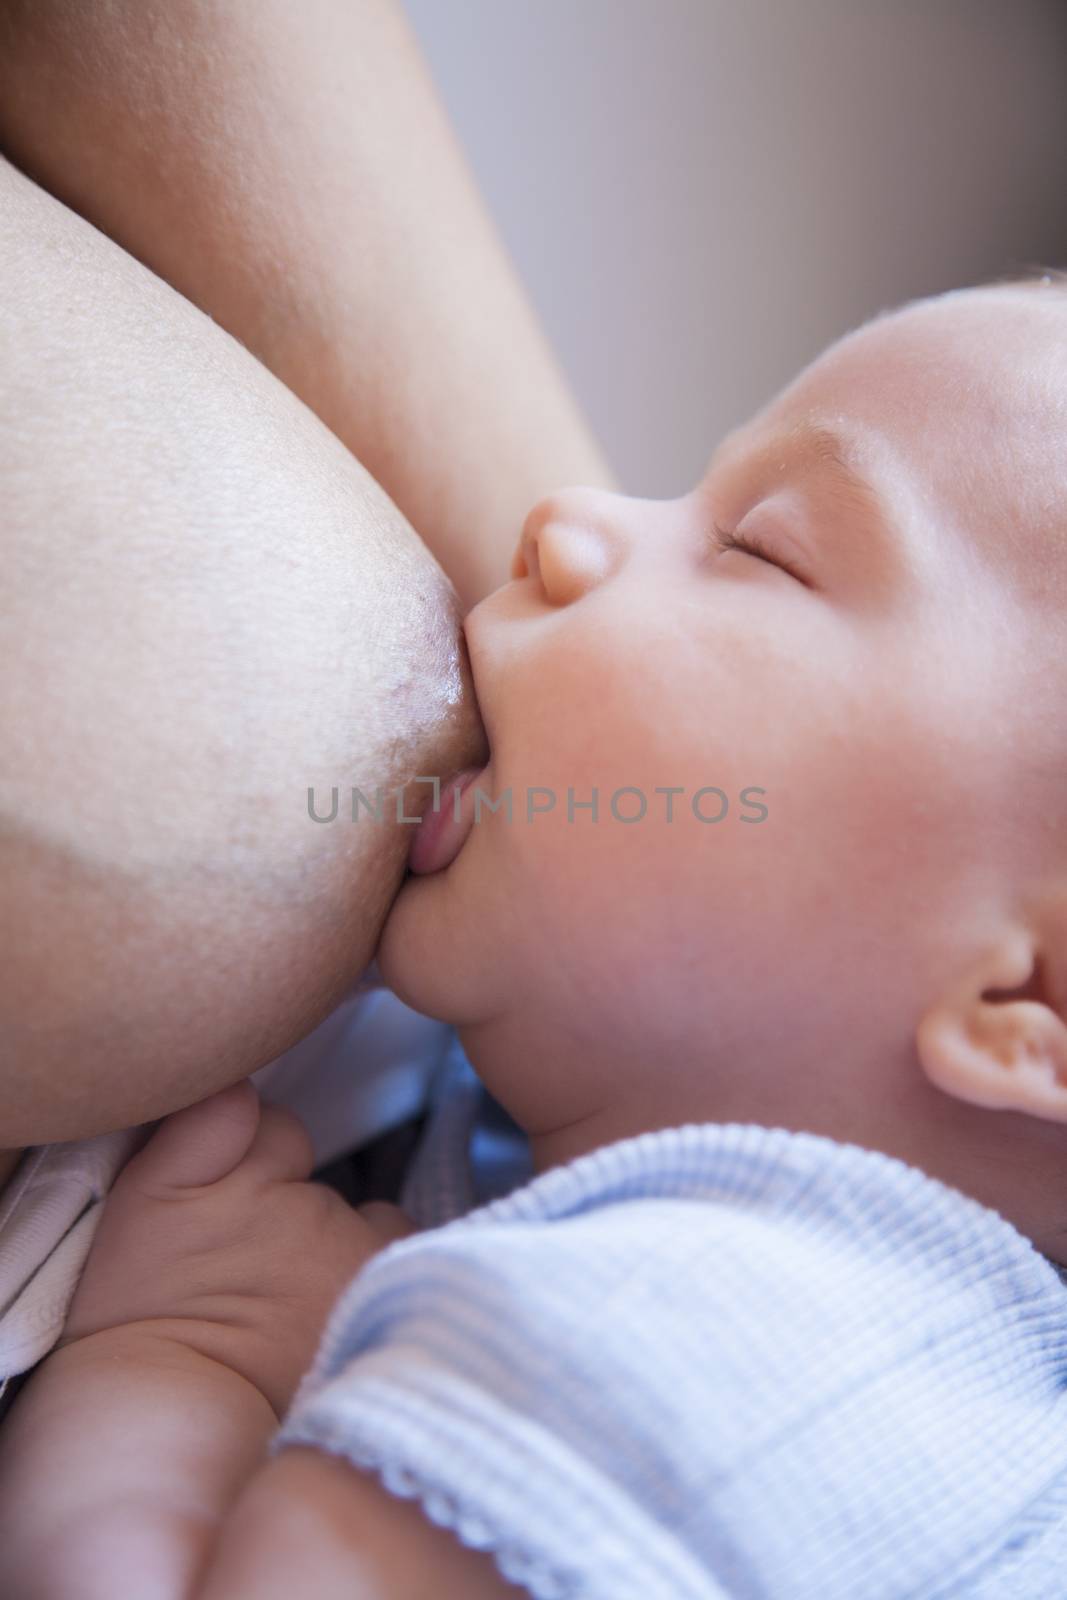 one month age tender lovely newborn baby closed eye blue shirt breastfeeding nursing mother breast